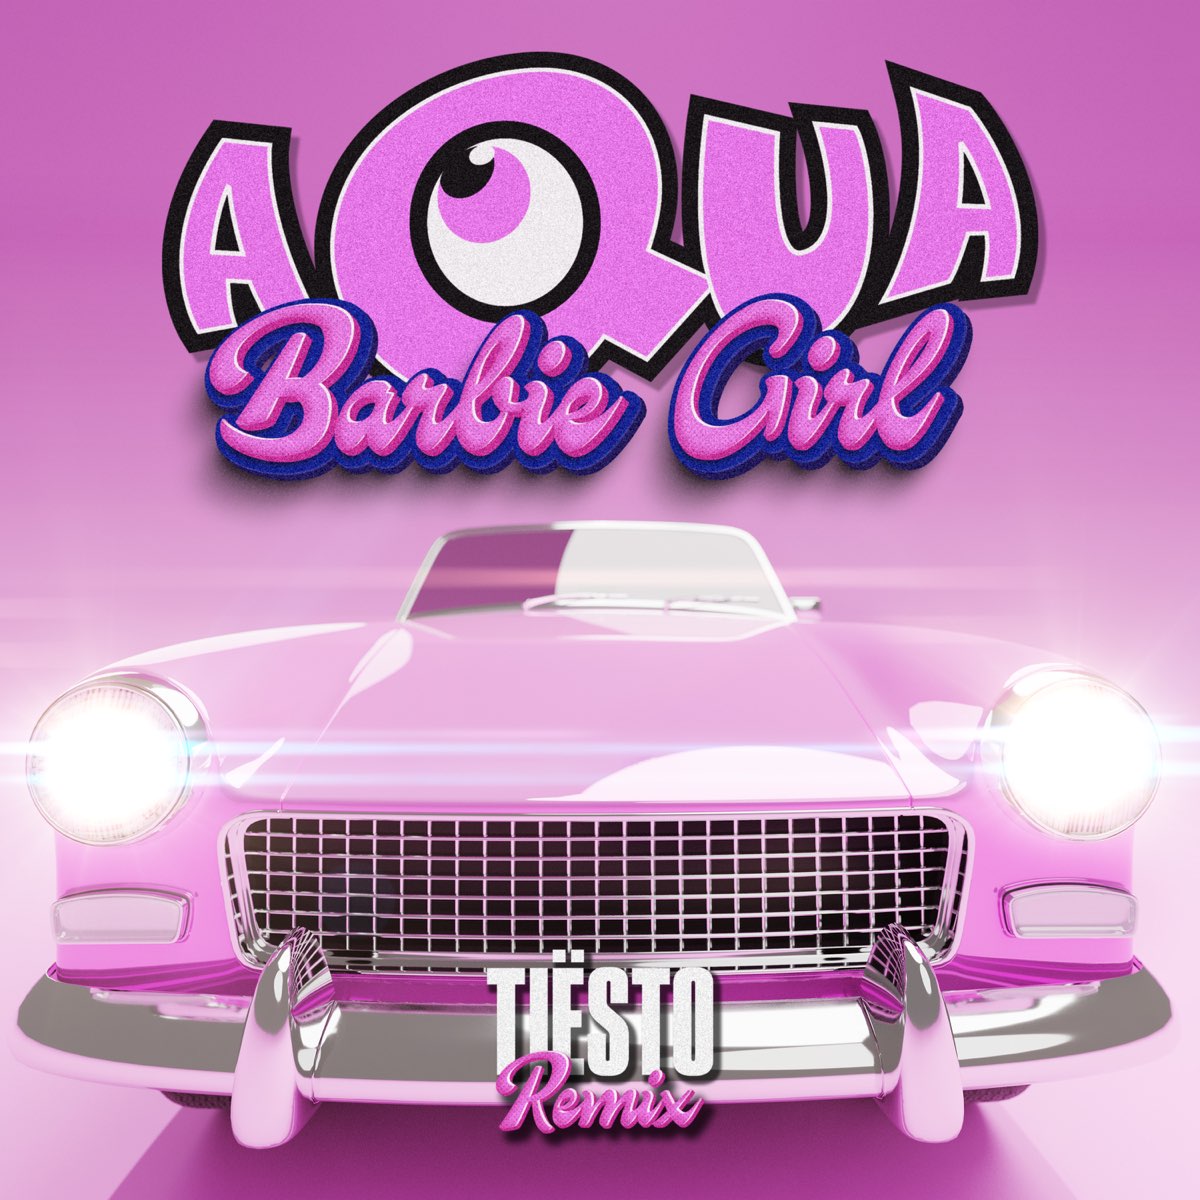 Barbie Girl (Tiësto Remix) - Single - Album by Aqua & Tiësto - Apple Music